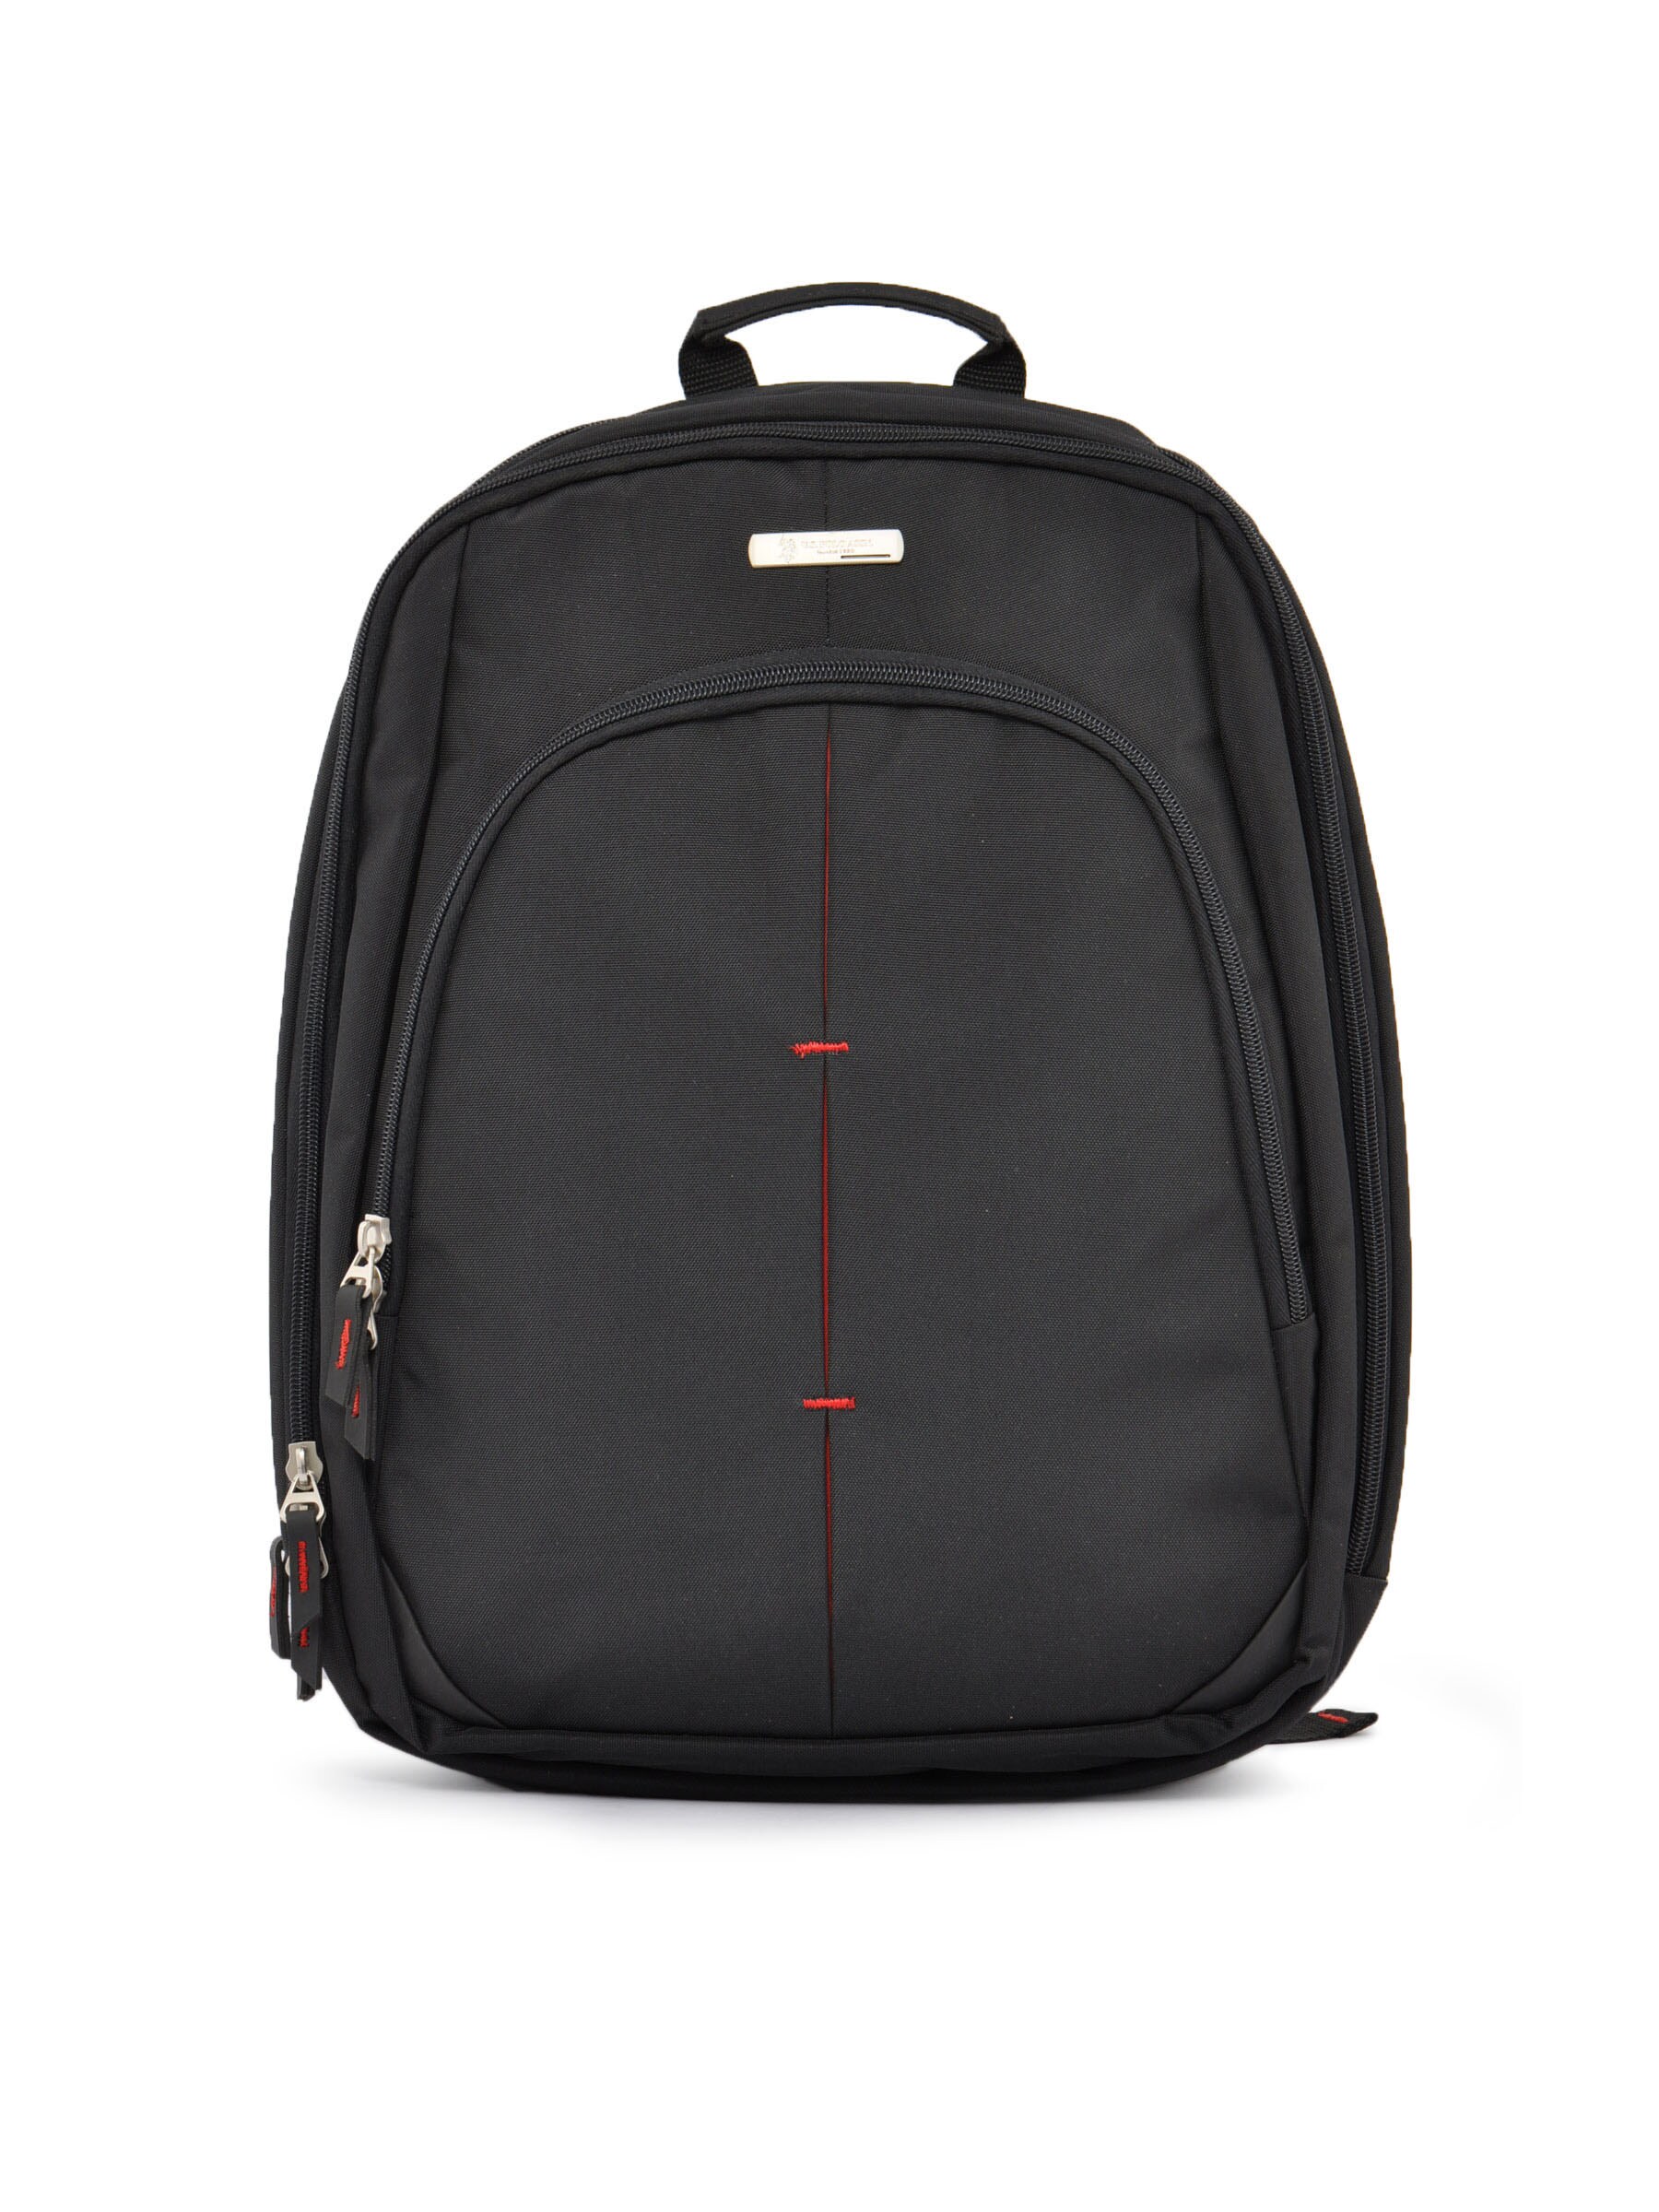 U.S. Polo Assn. Unisex Laptop Black Backpack